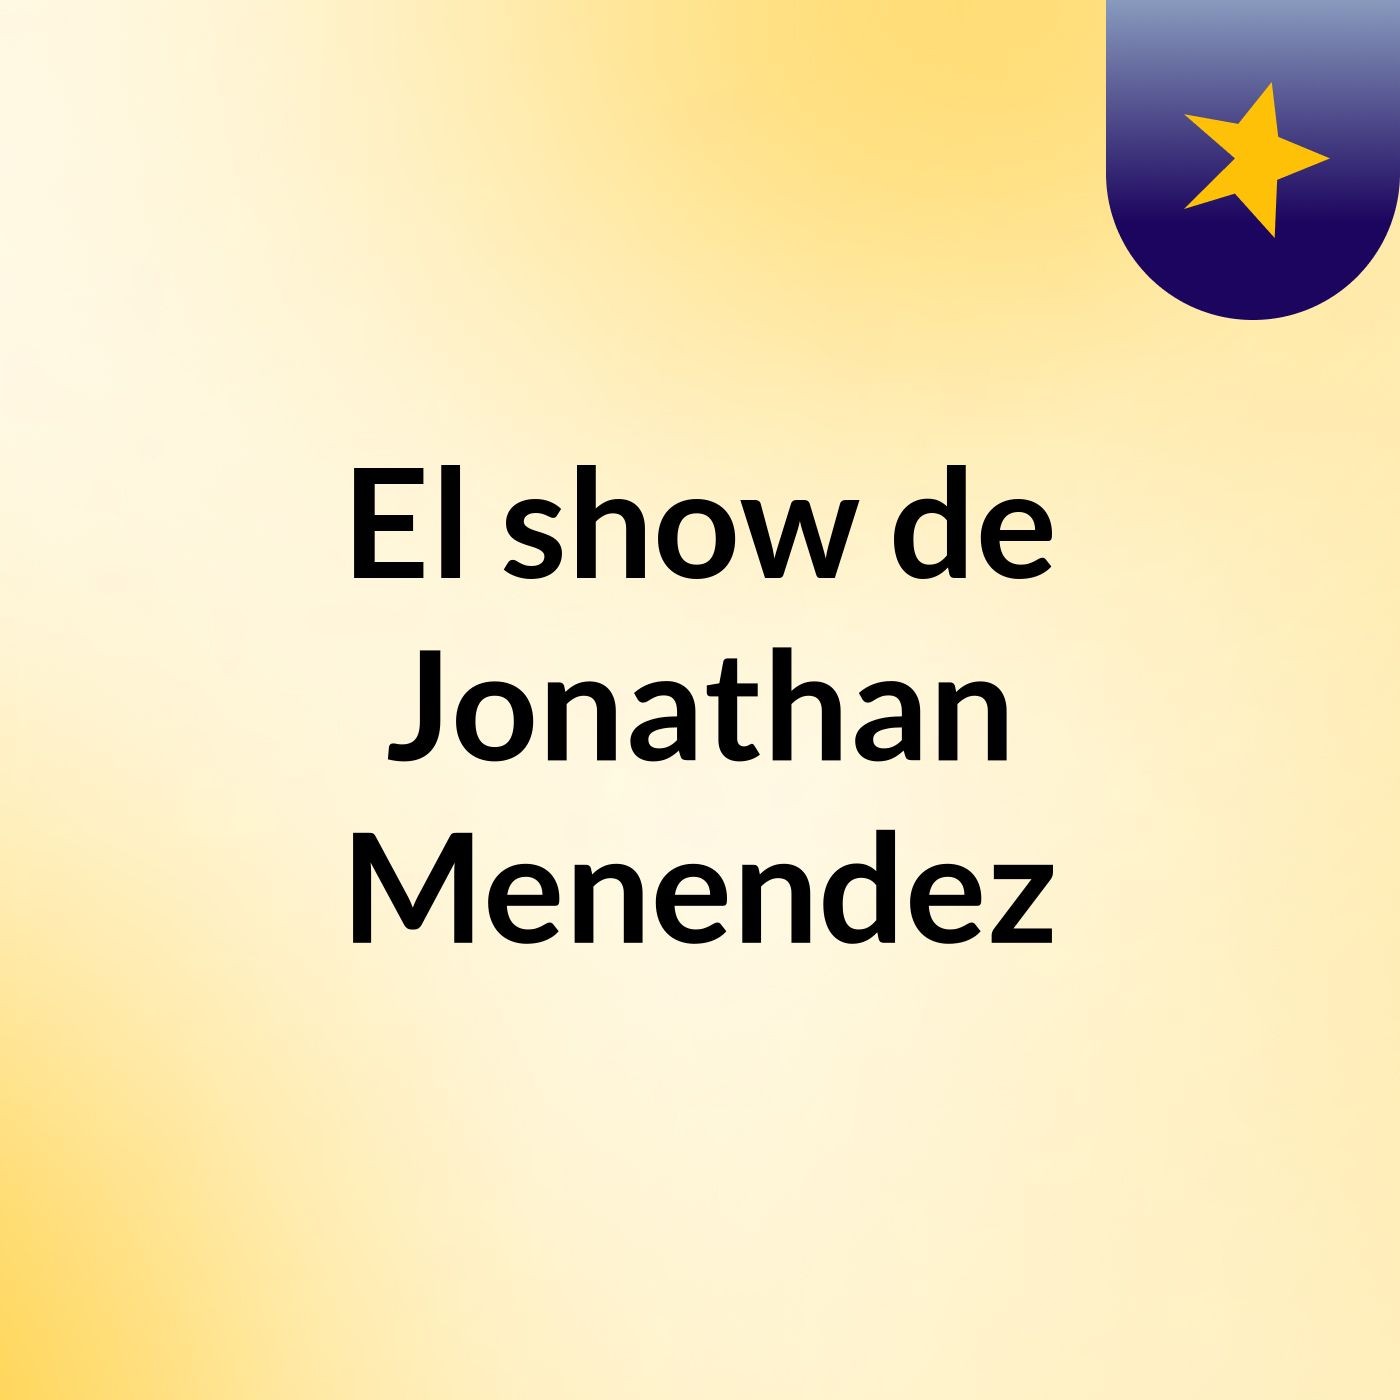 Episodio 3 - El show de Jonathan Menendez